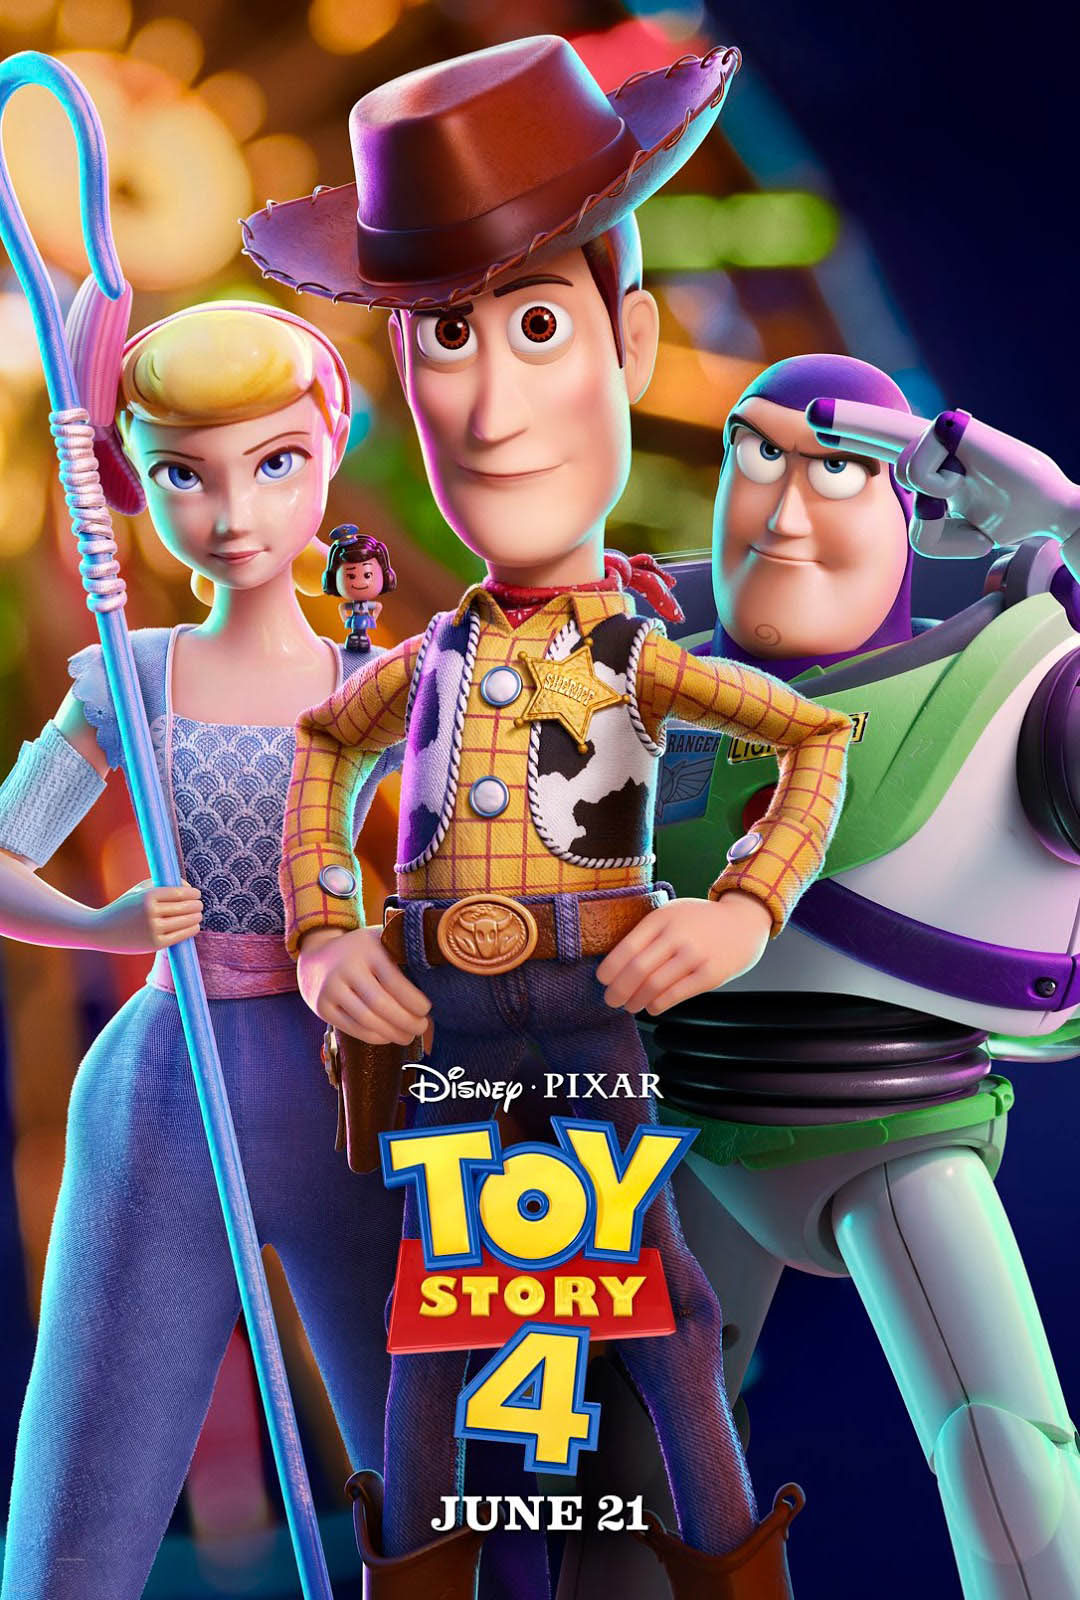 Toy Story 4 (2019) Full Movie Free Online